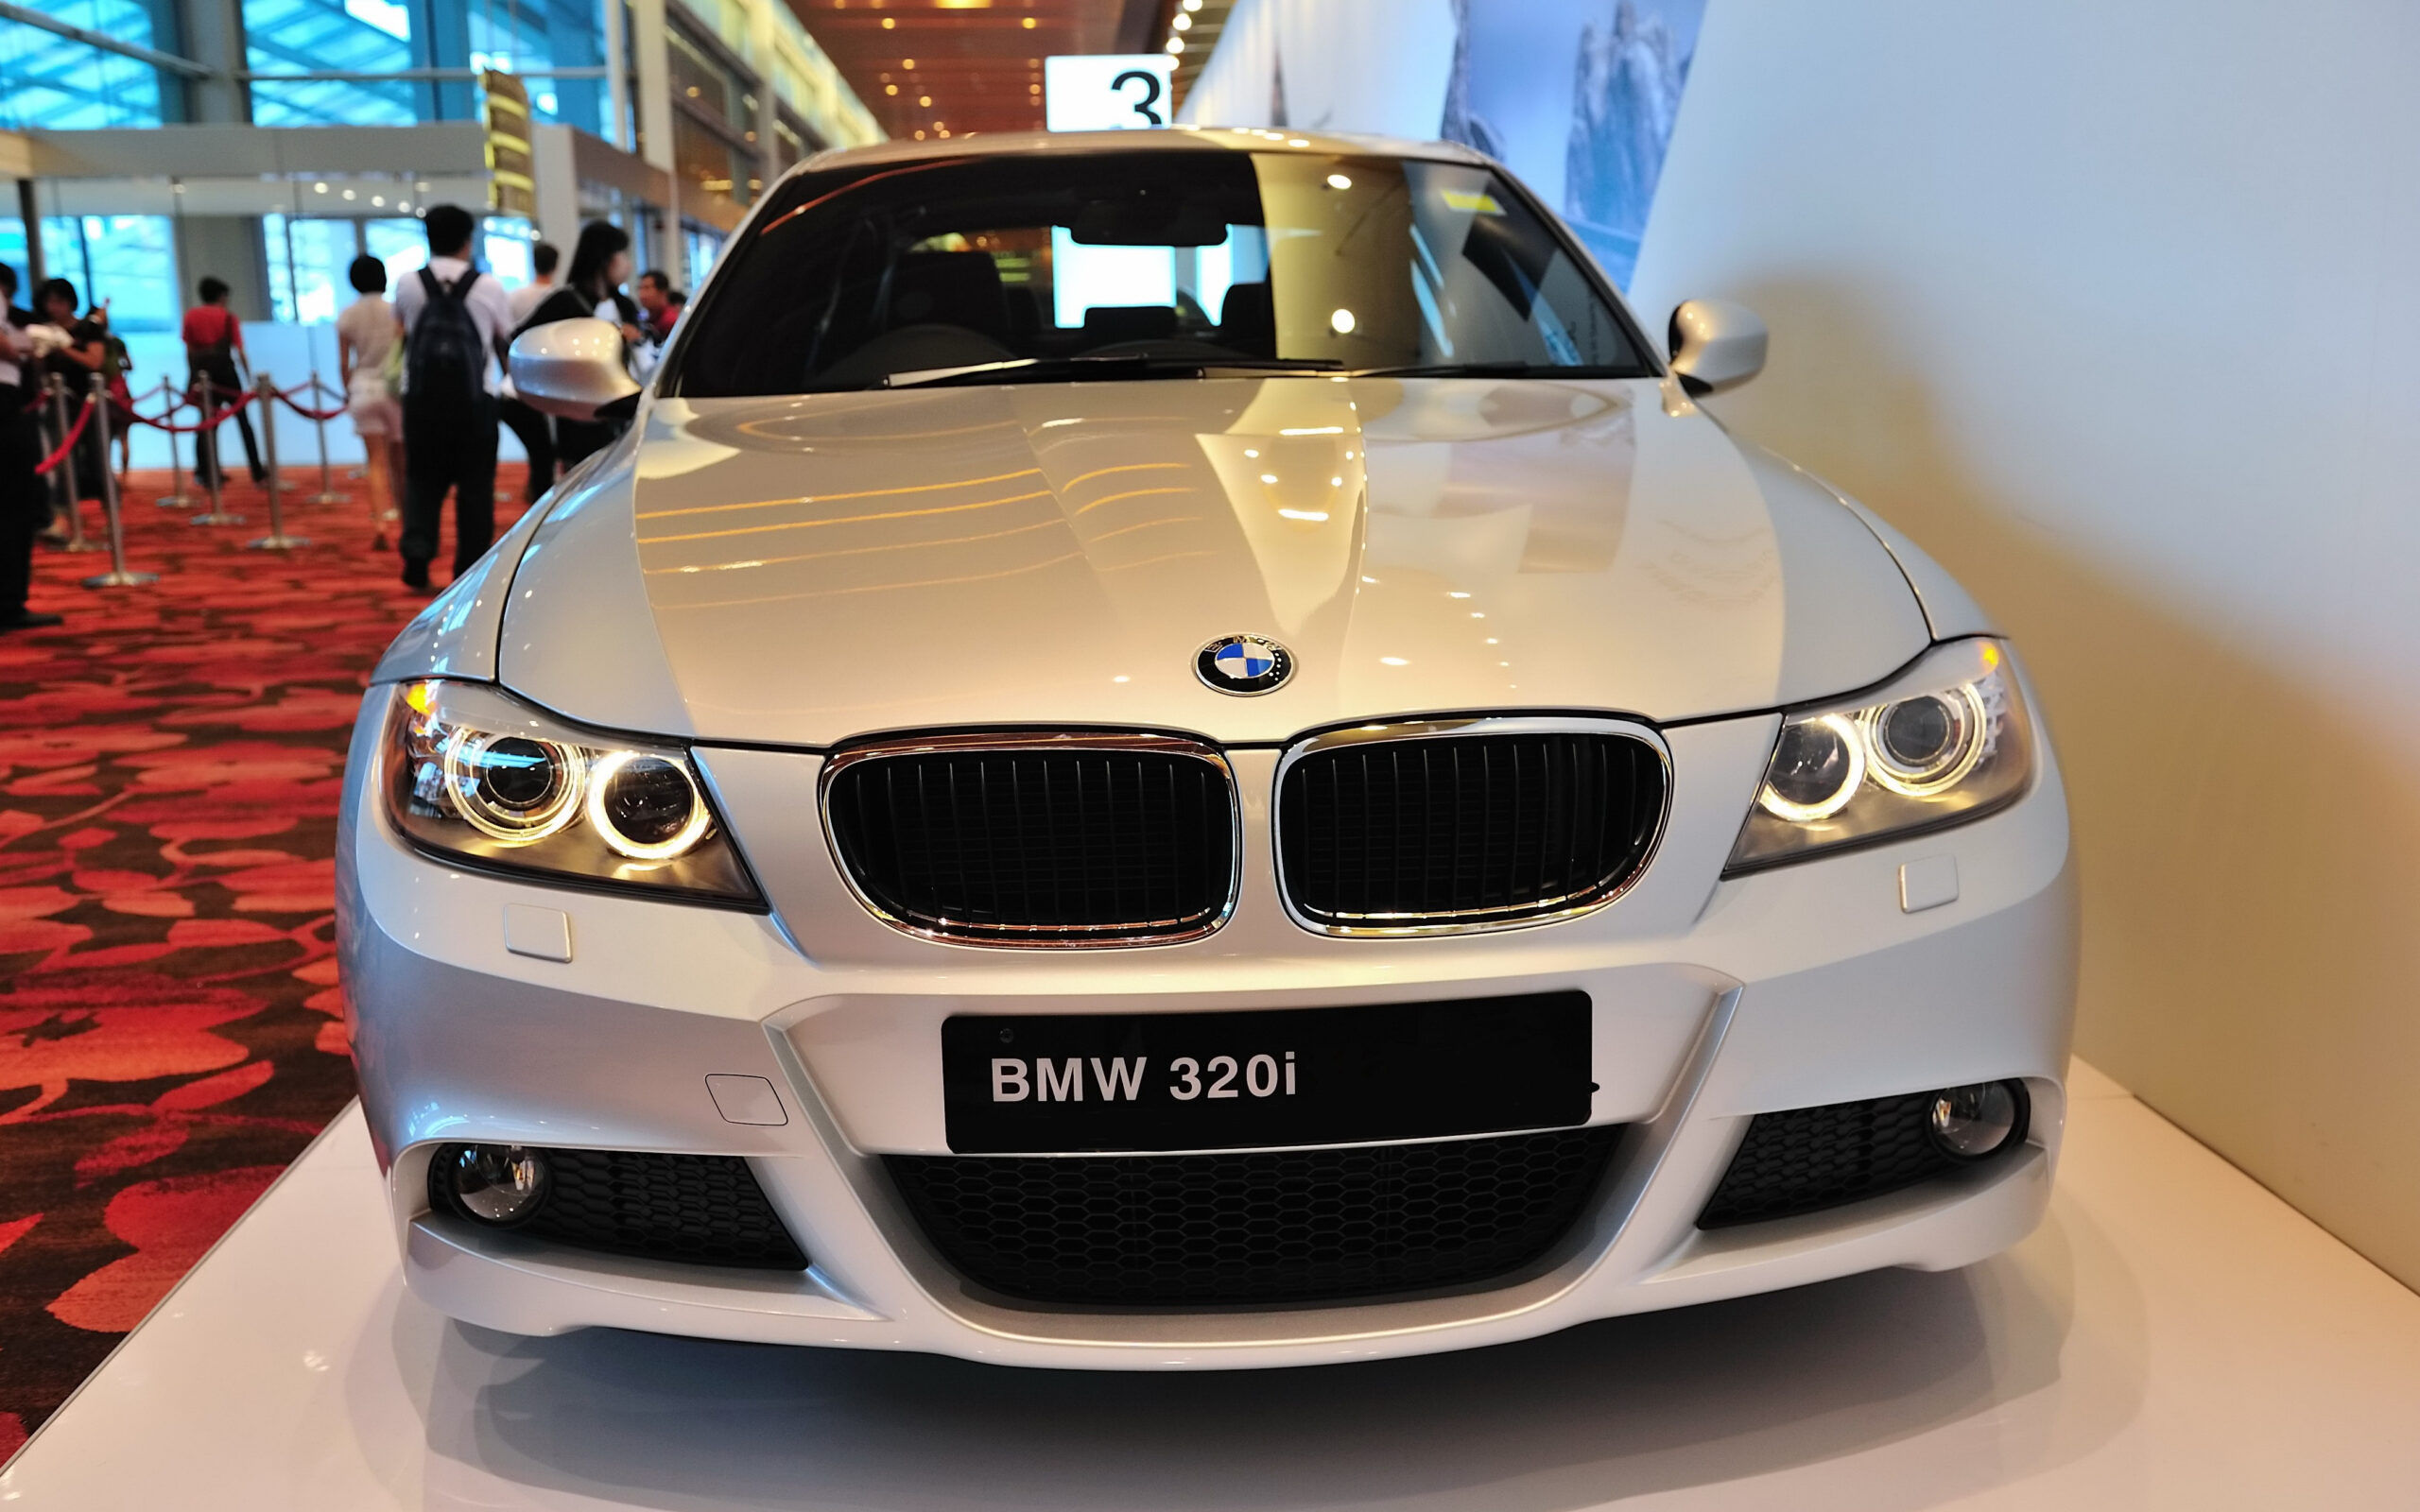 BMW 320i 2011 Review